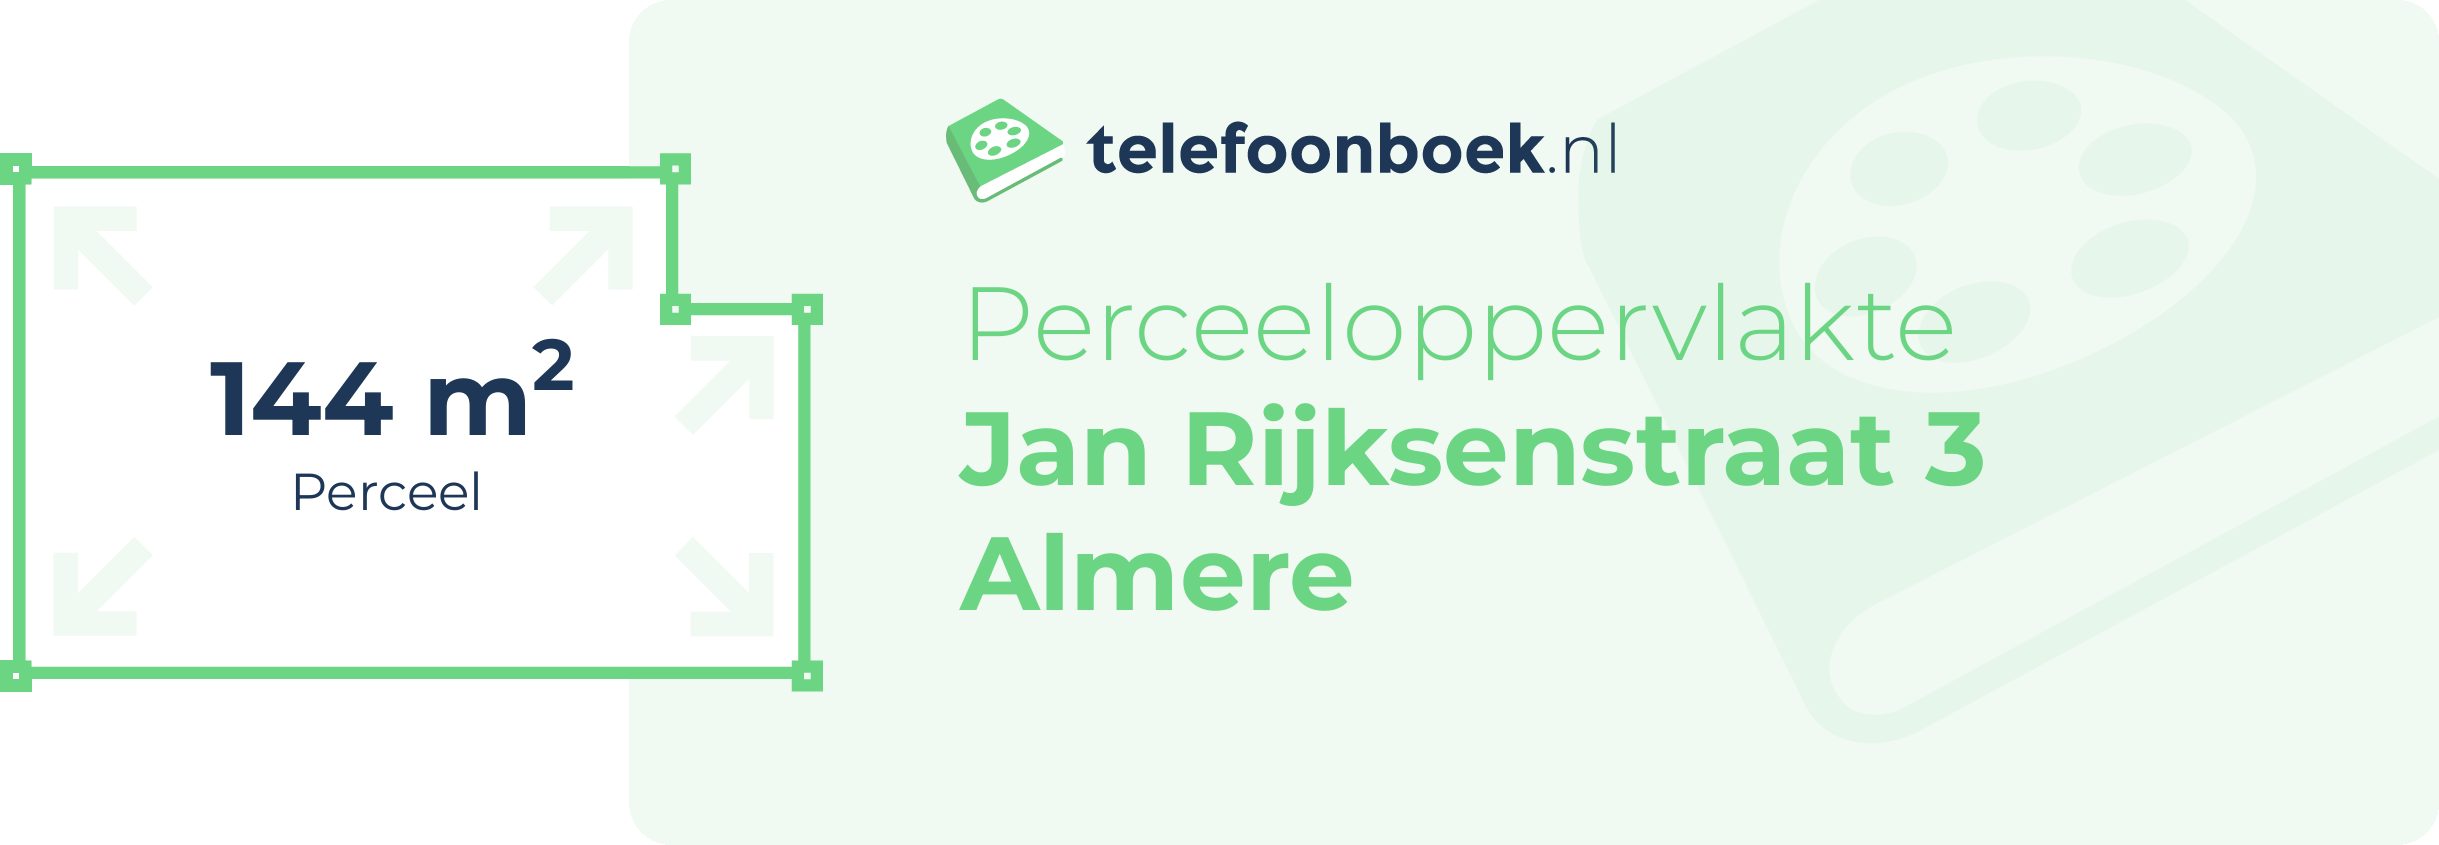 Perceeloppervlakte Jan Rijksenstraat 3 Almere